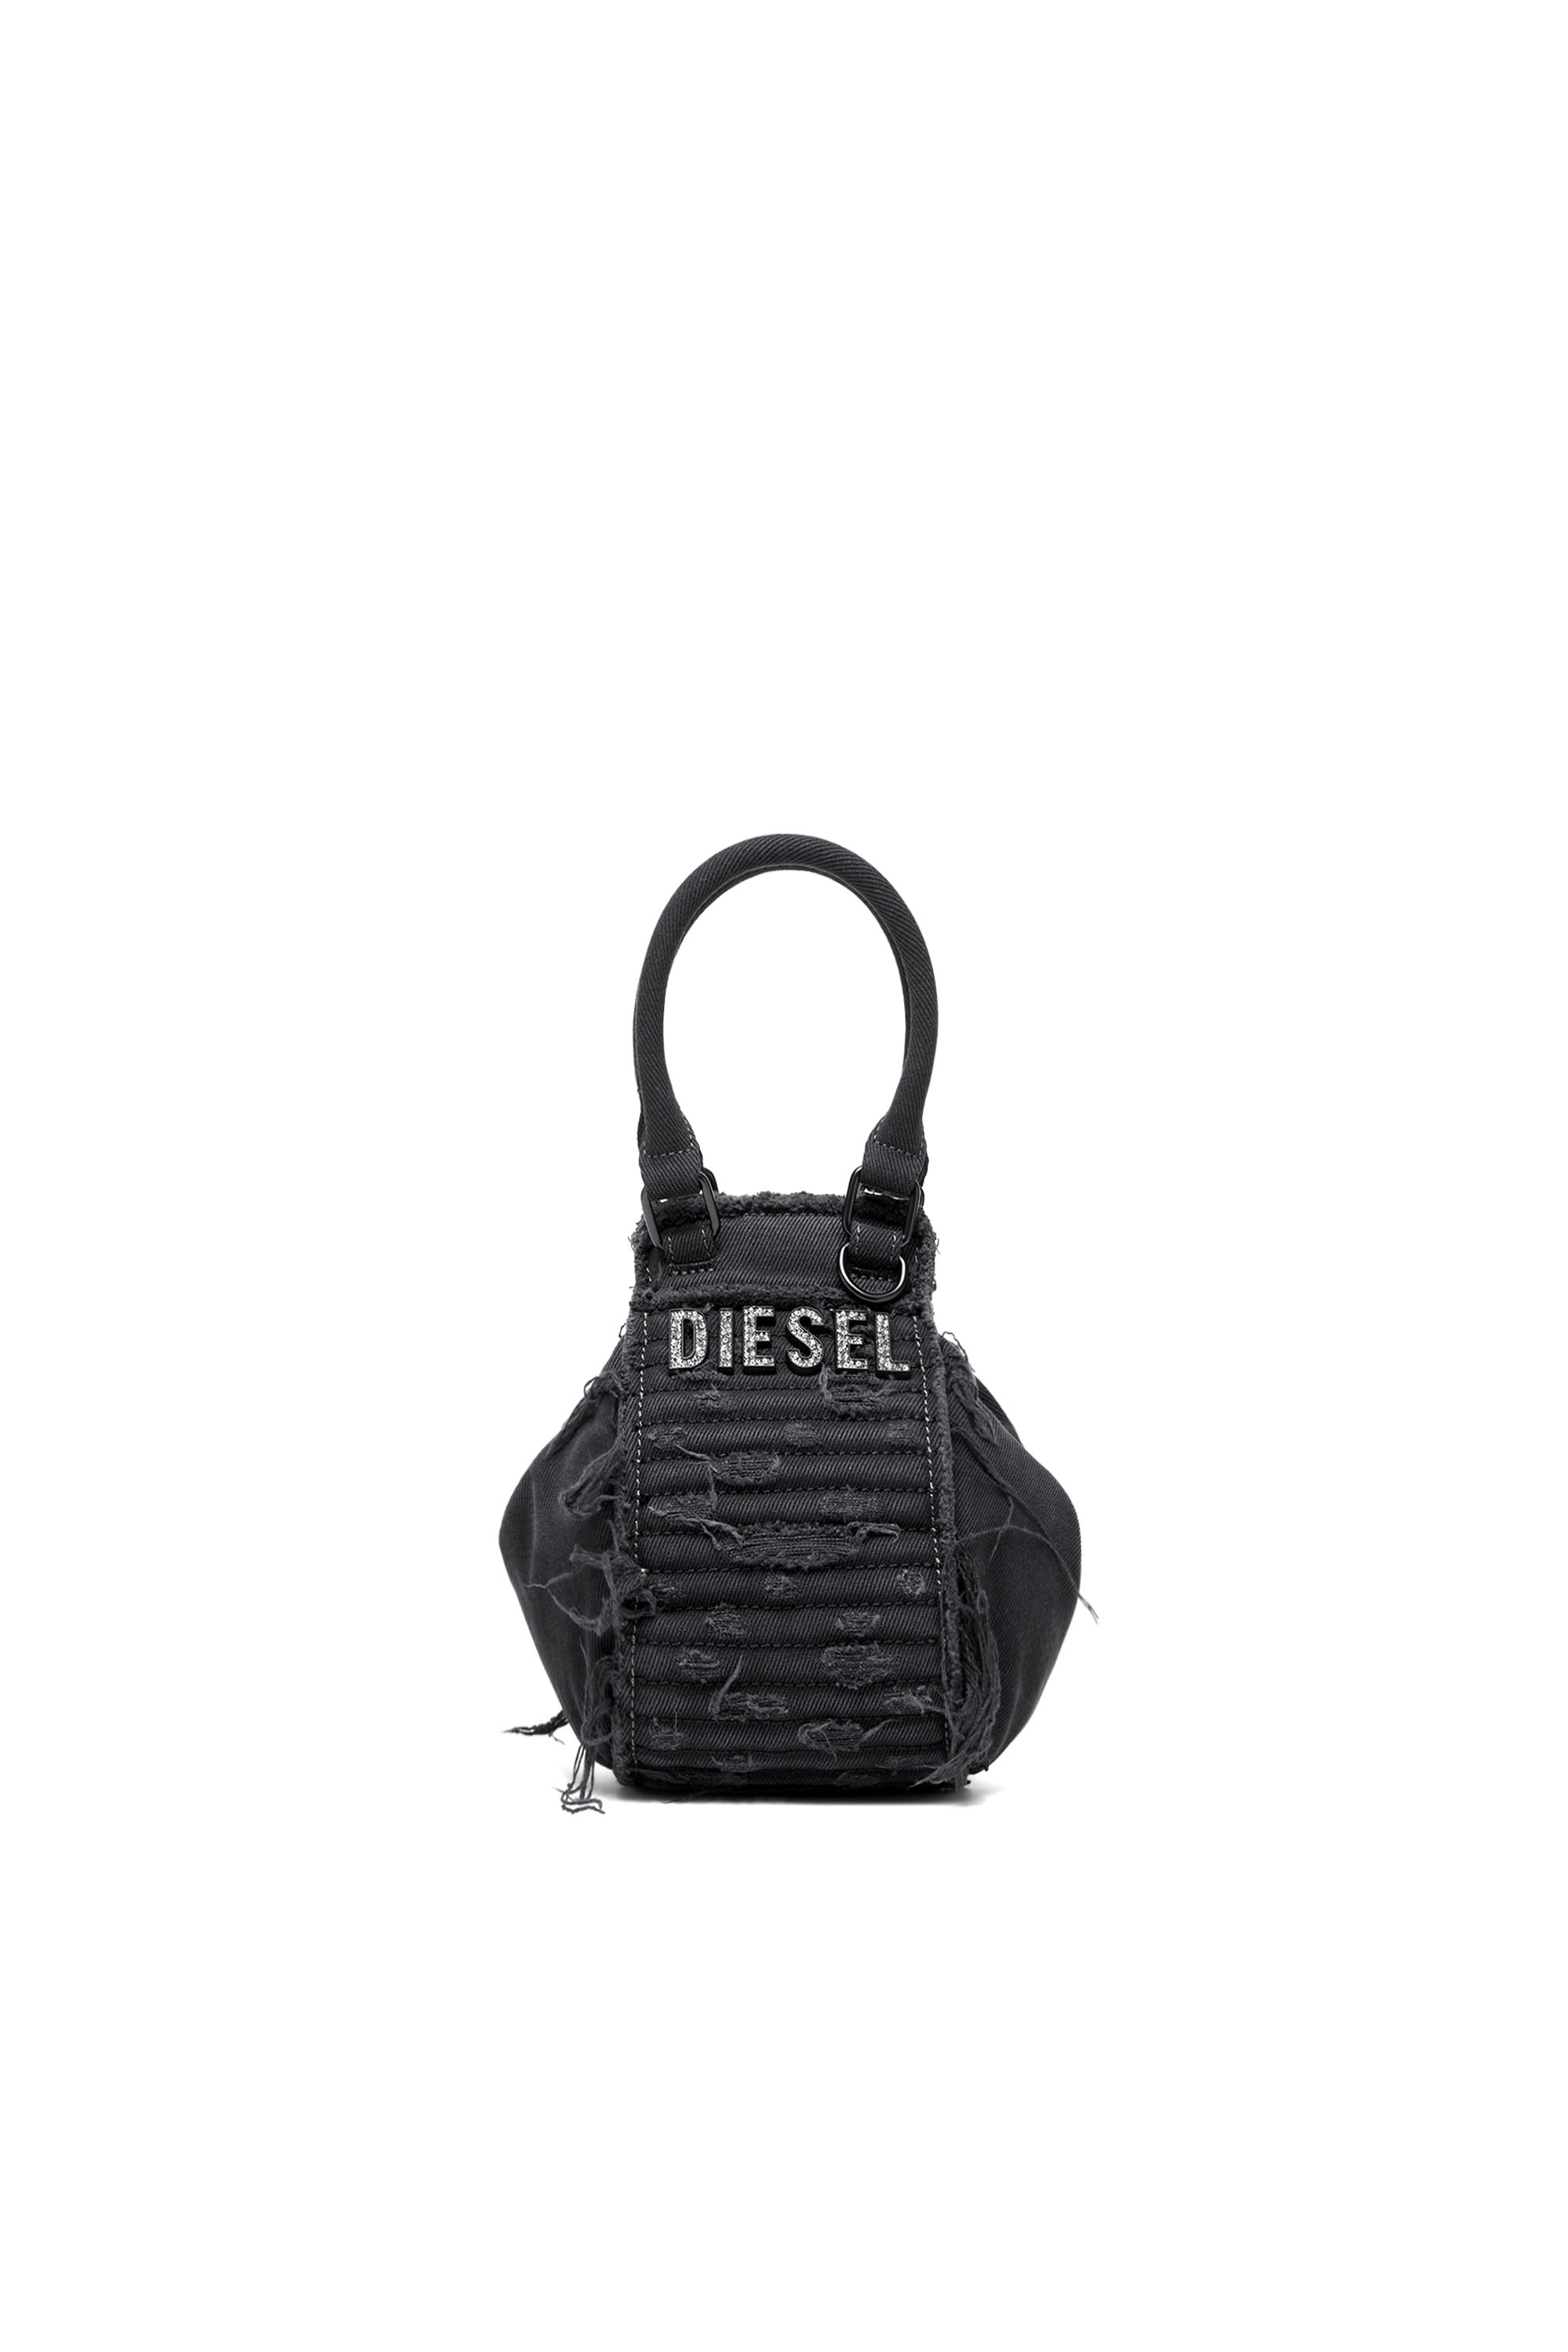 Diesel - D-VINA-C XS, Black - Image 1